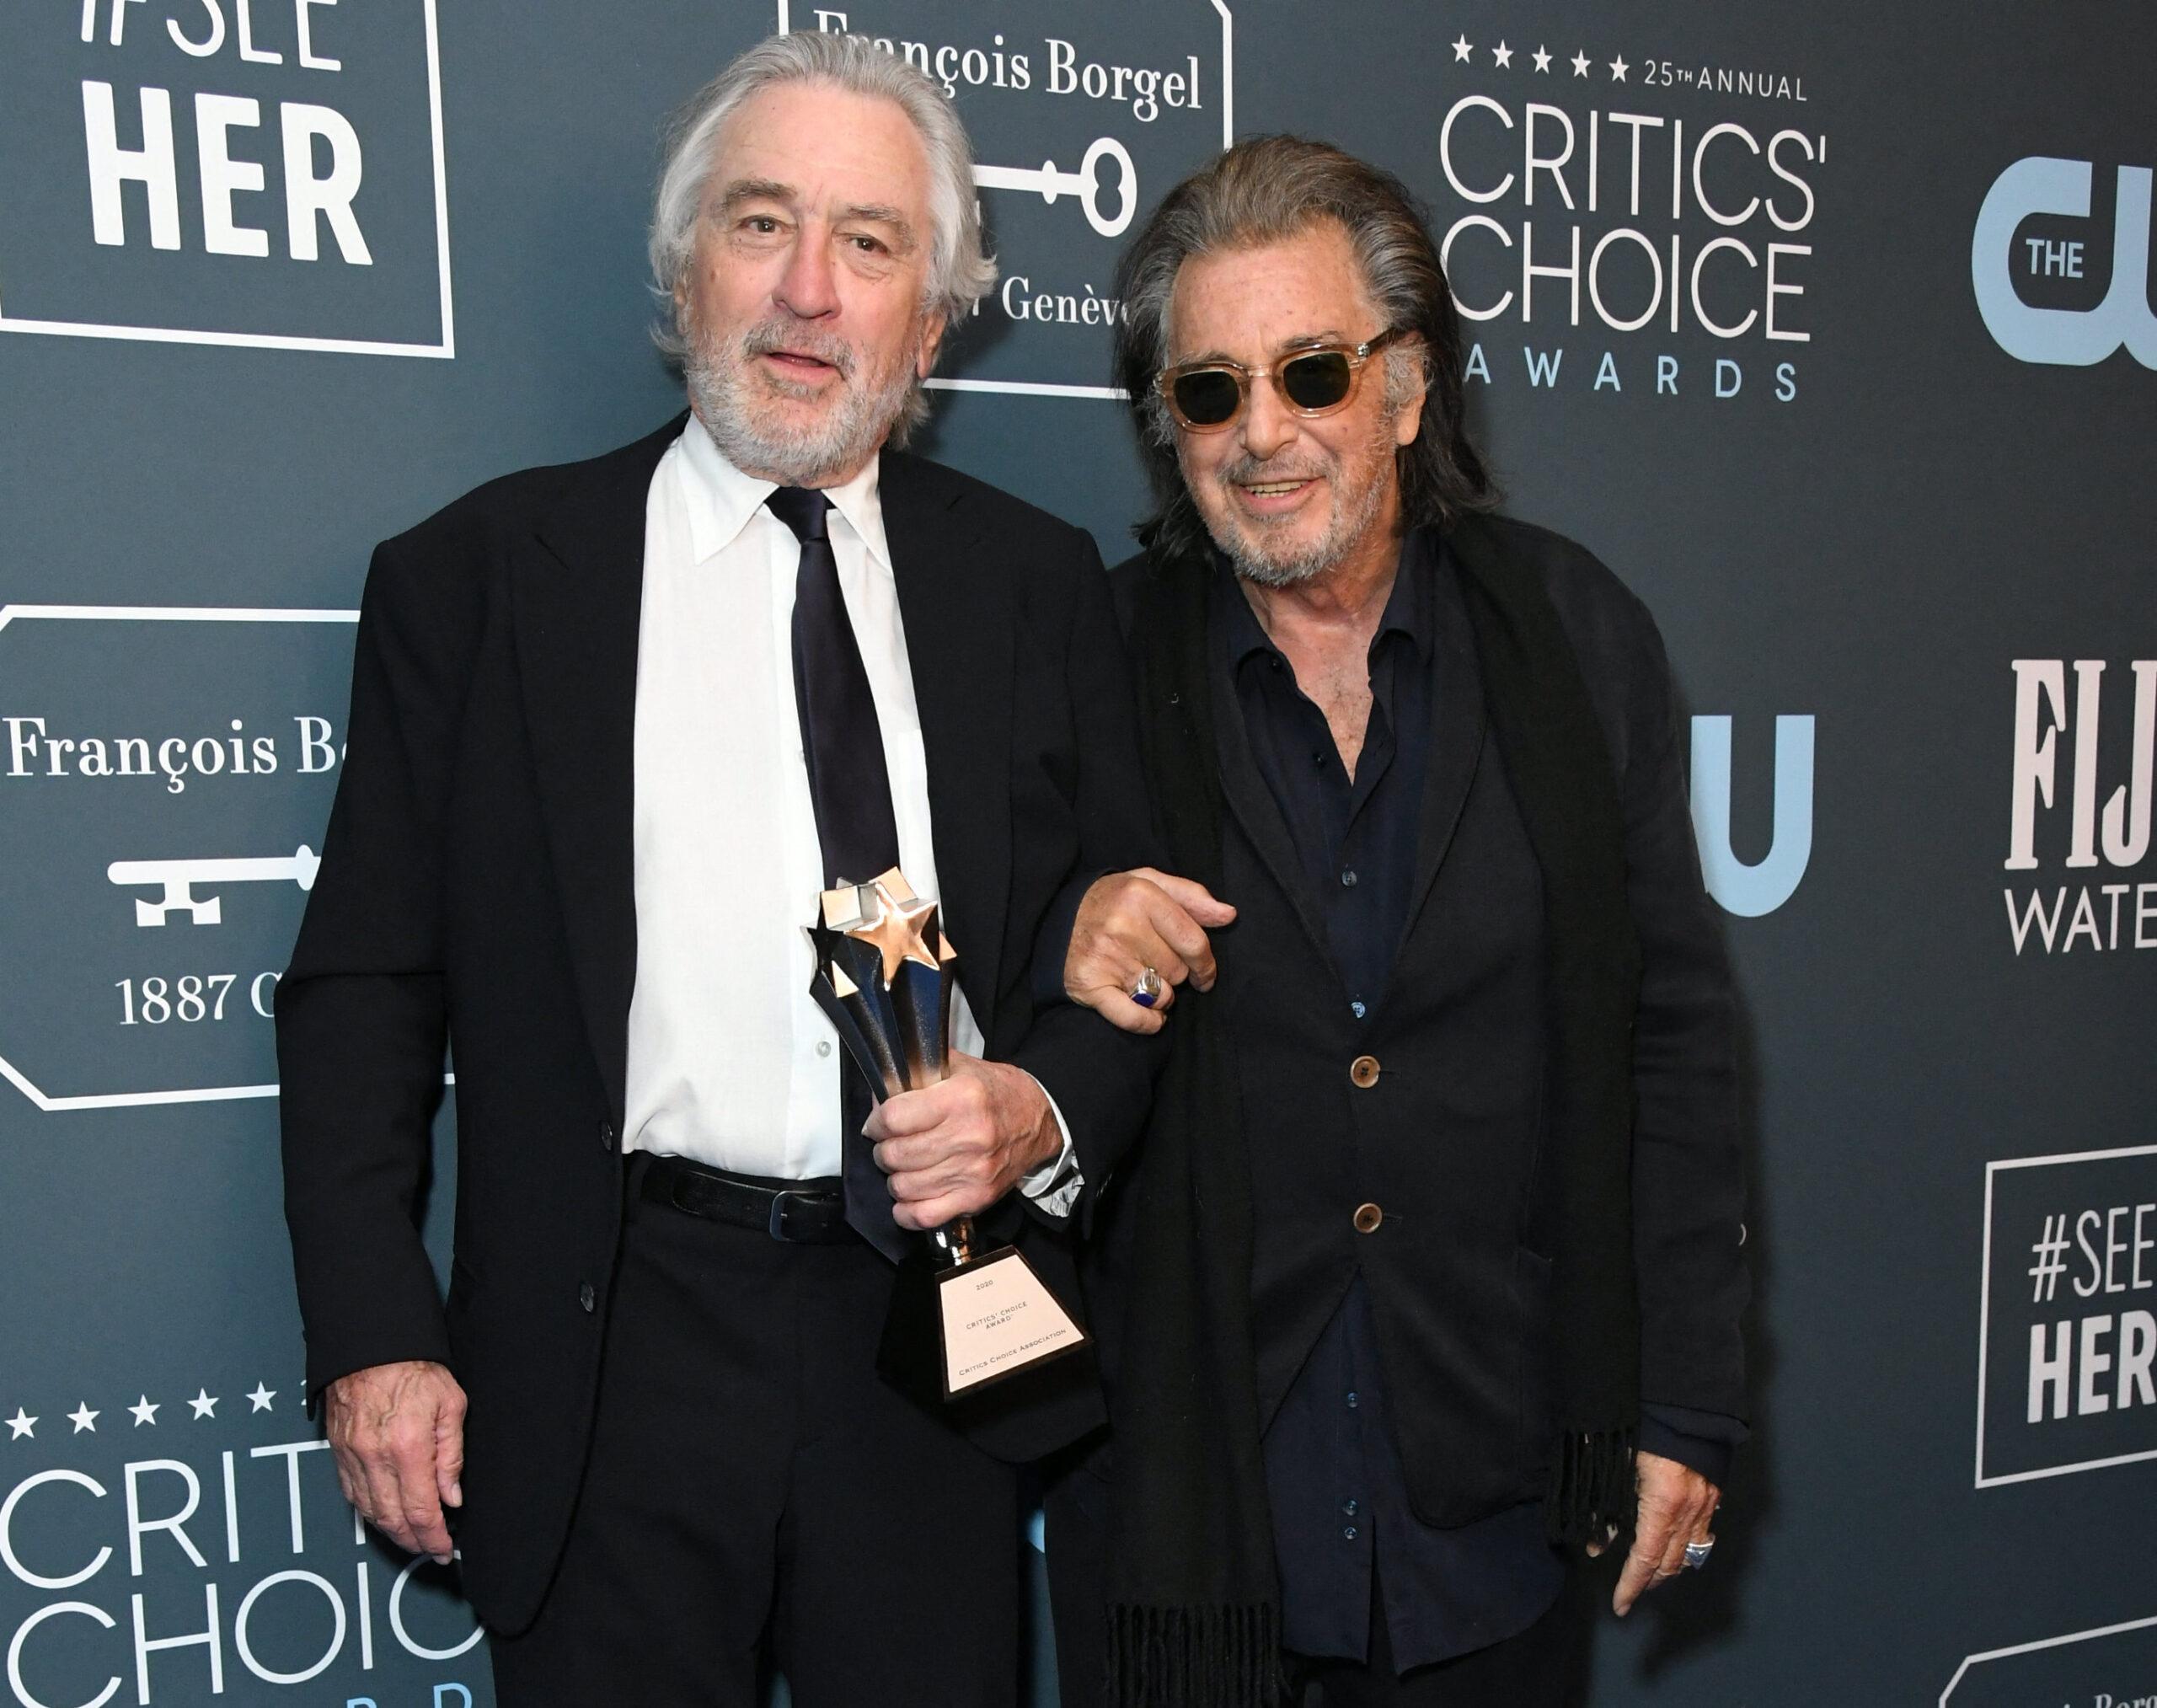 Robert De Niro & Al Pacino at the 25th Annual Critici's Choice Awards